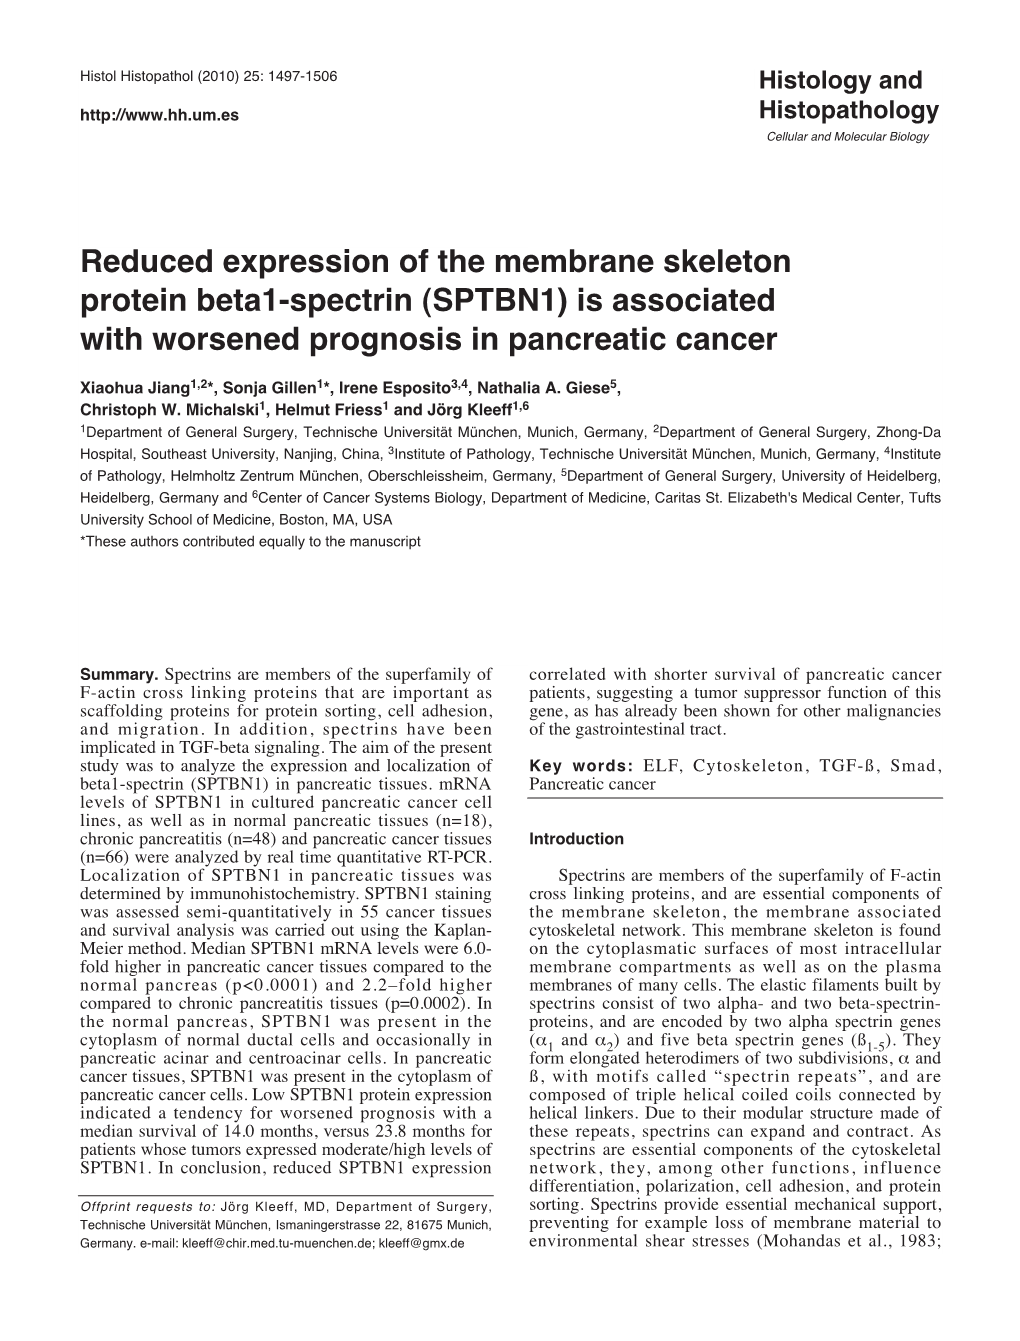 Reduced Expression of the Membrane Skeleton Protein Beta1